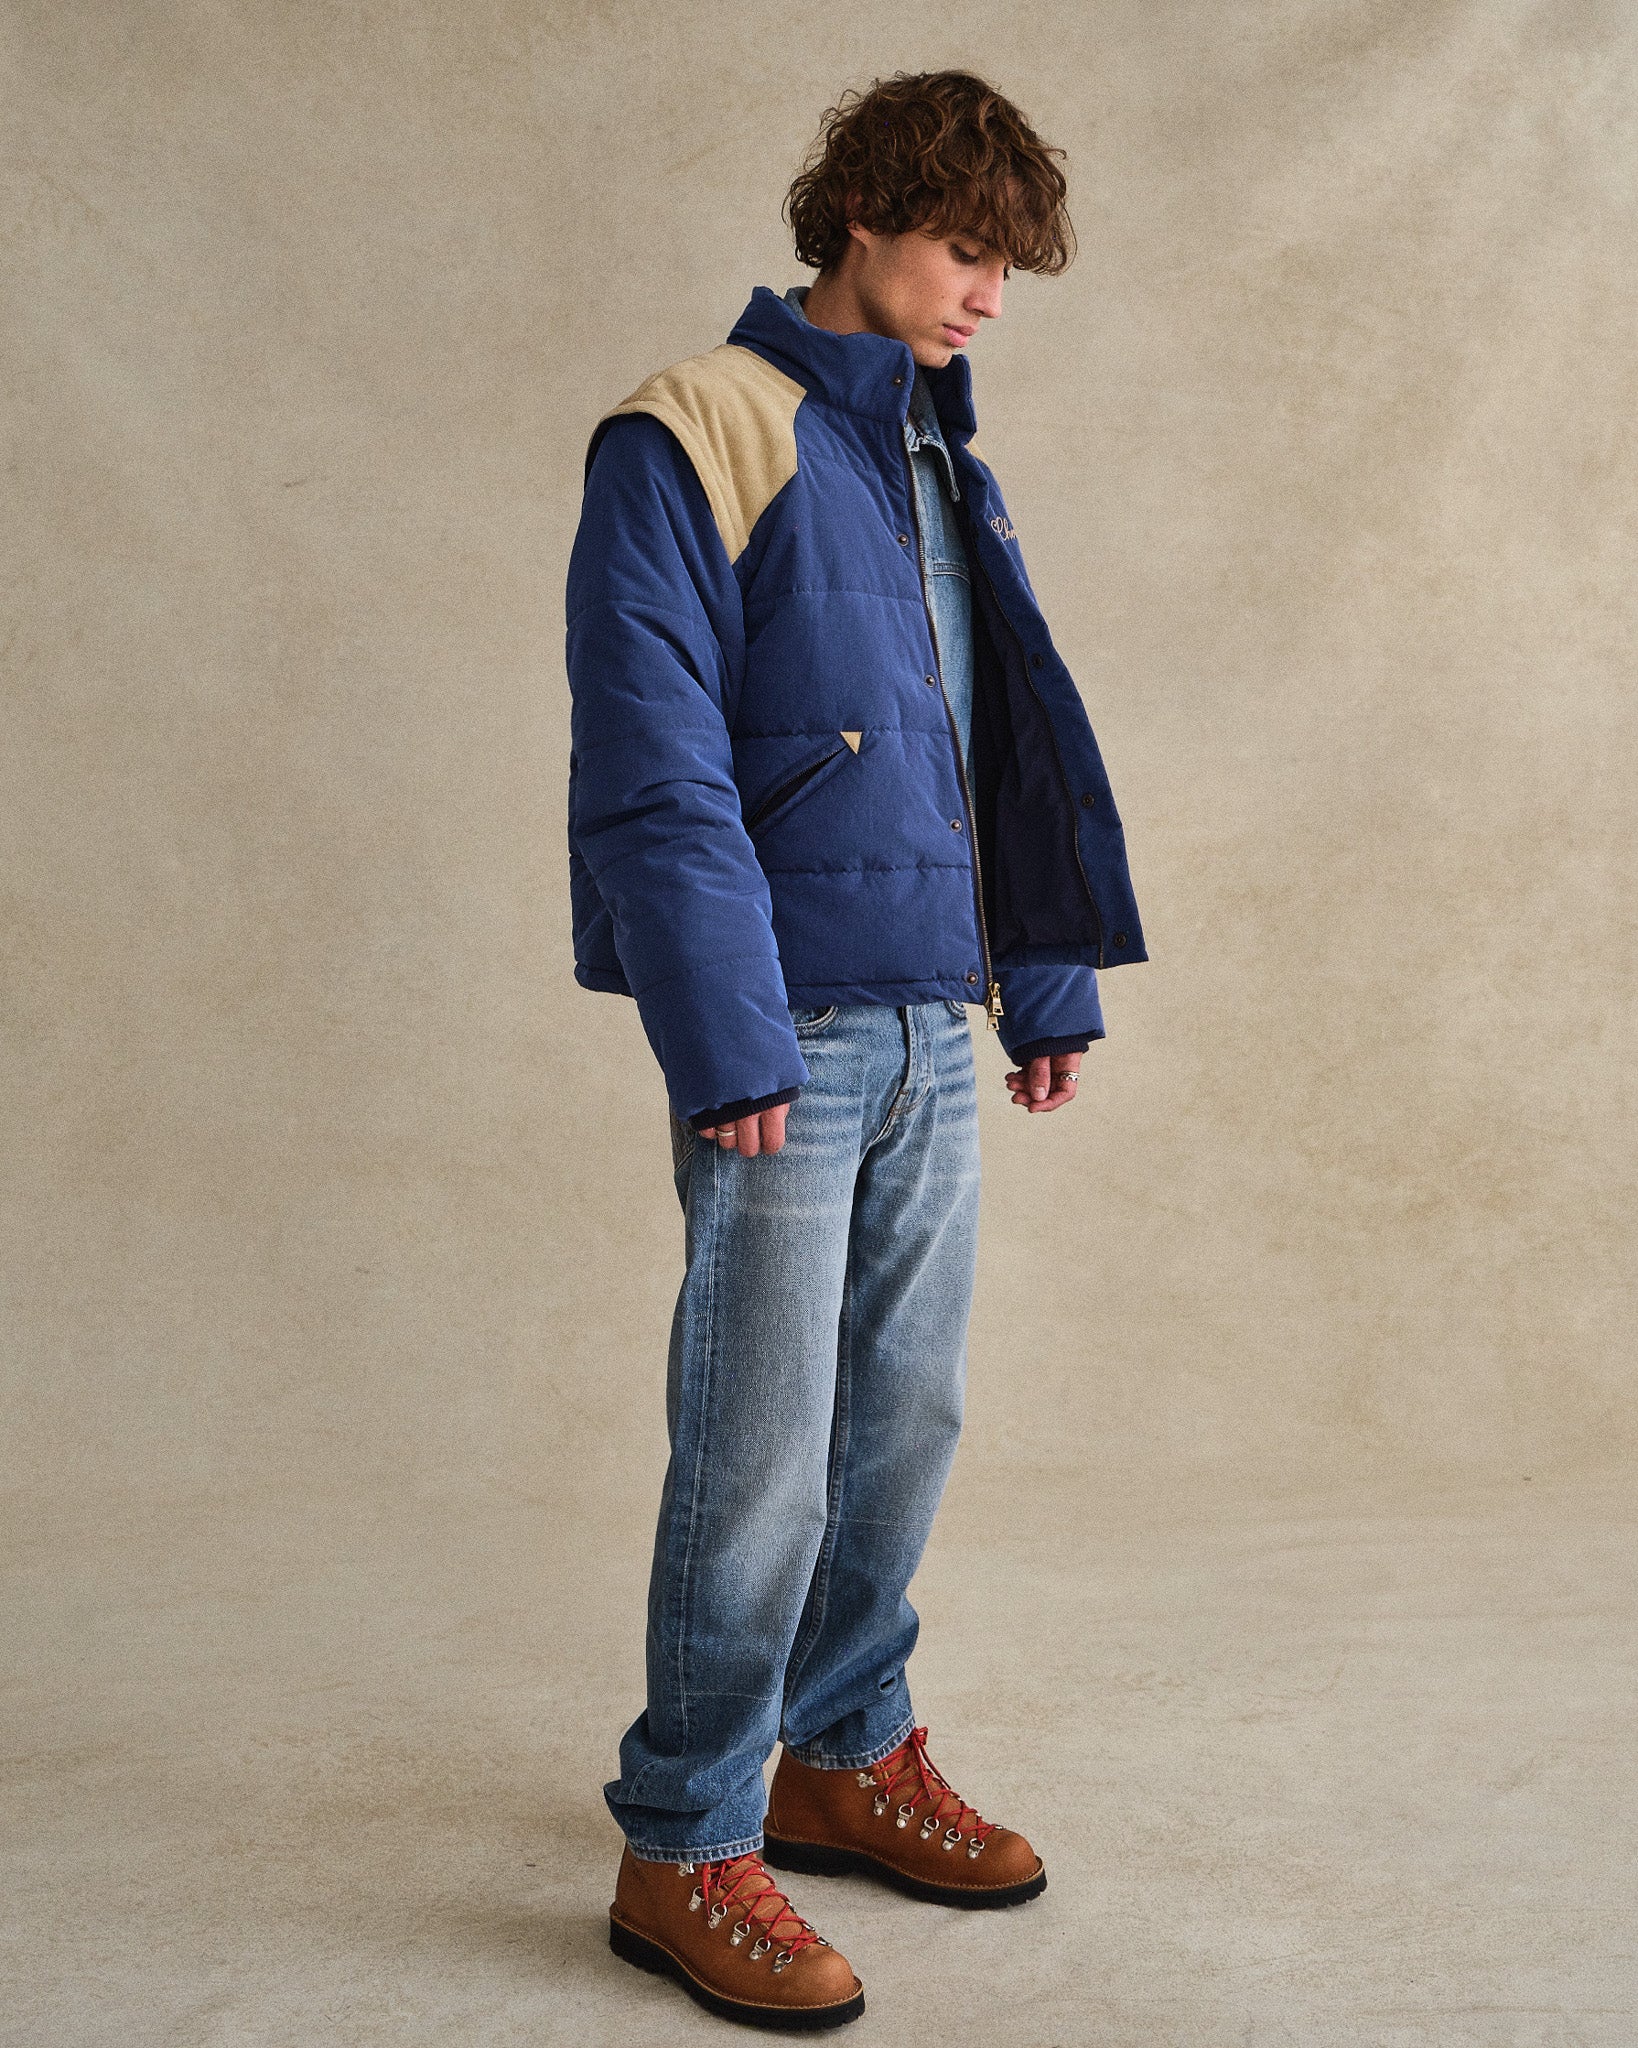 Mountain Puffer Jacket (Royal Blue)